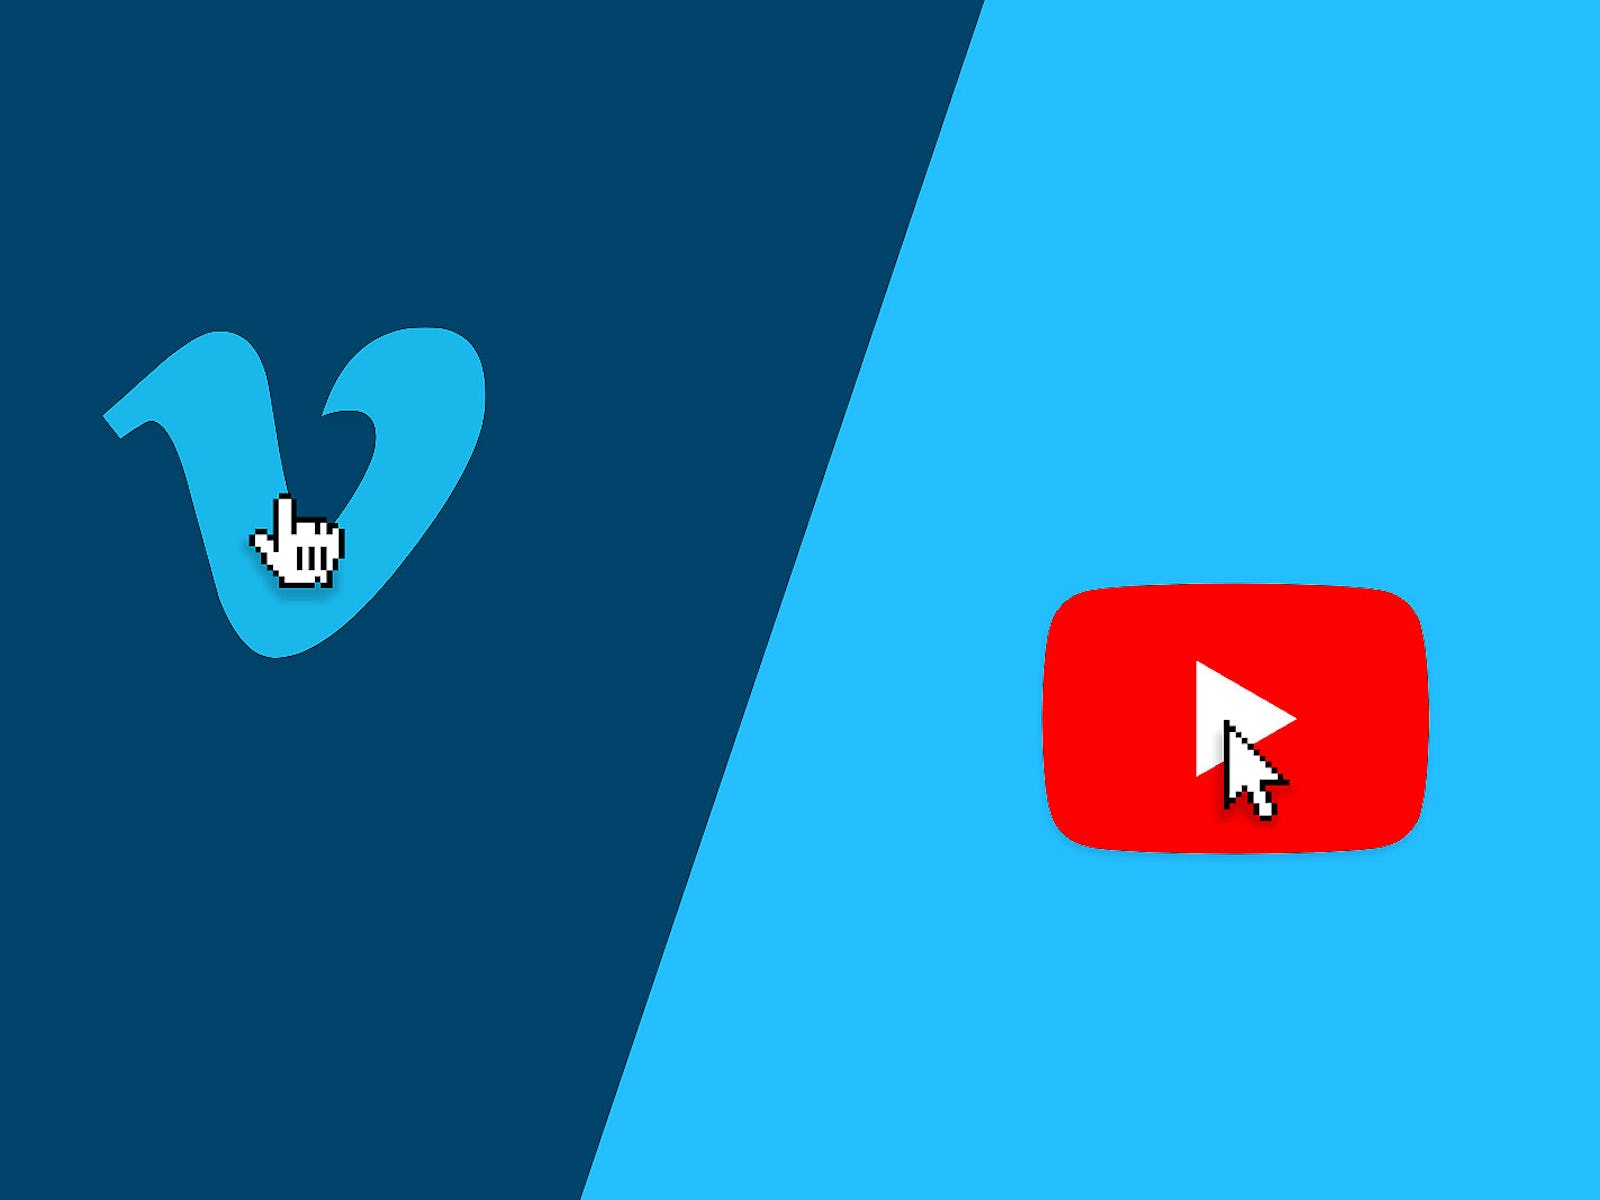 Comparison of Vimeo and Youtube